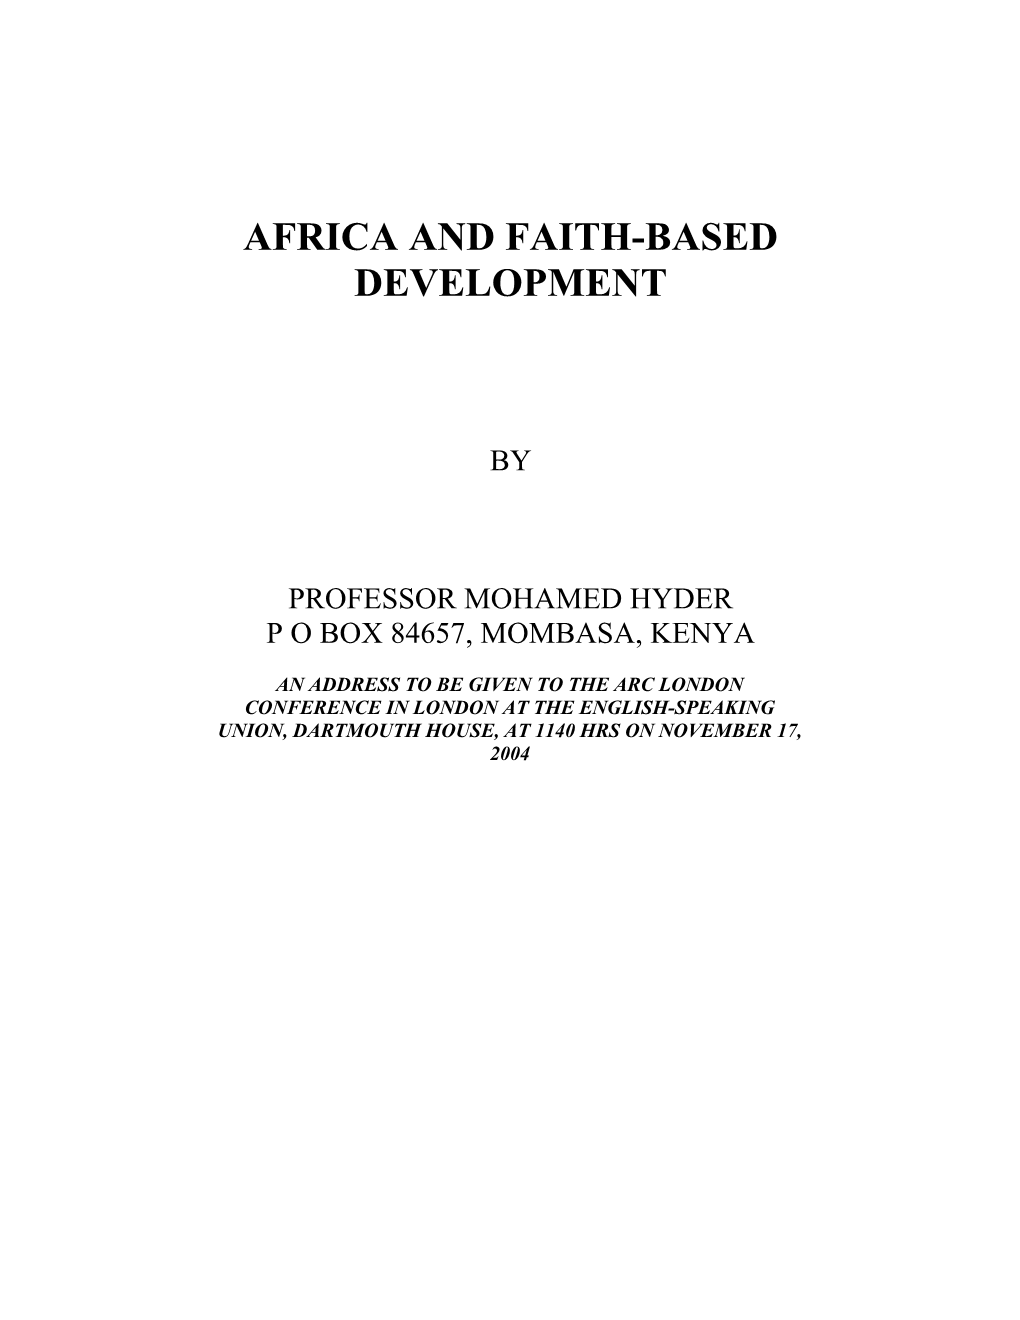 Africa and Faith-Based Development